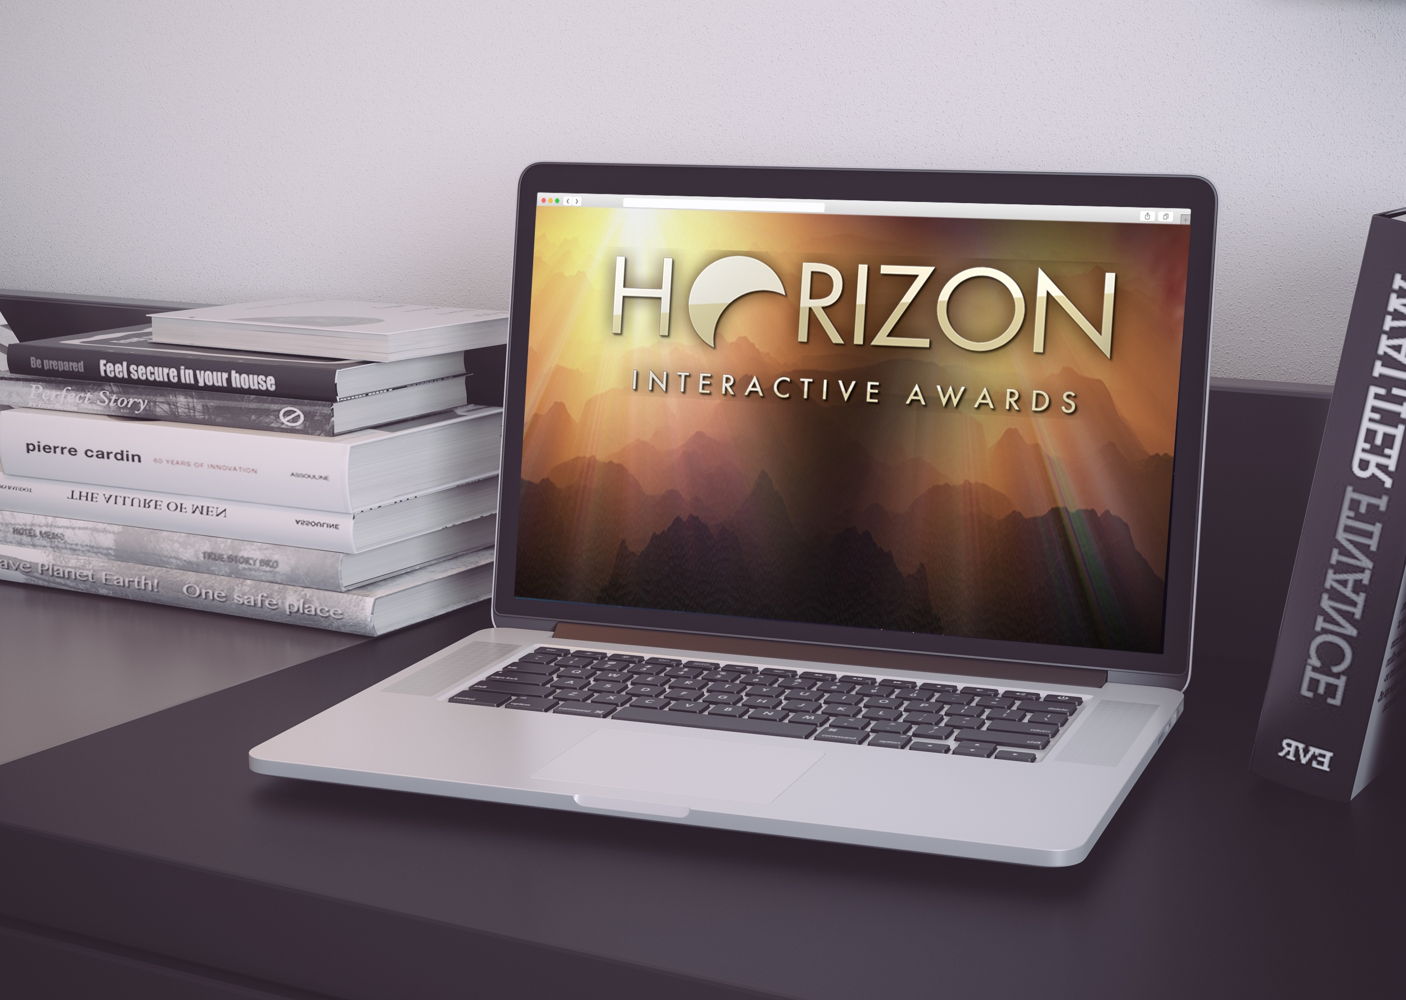 The Horizon Awards celebrate great interactive work